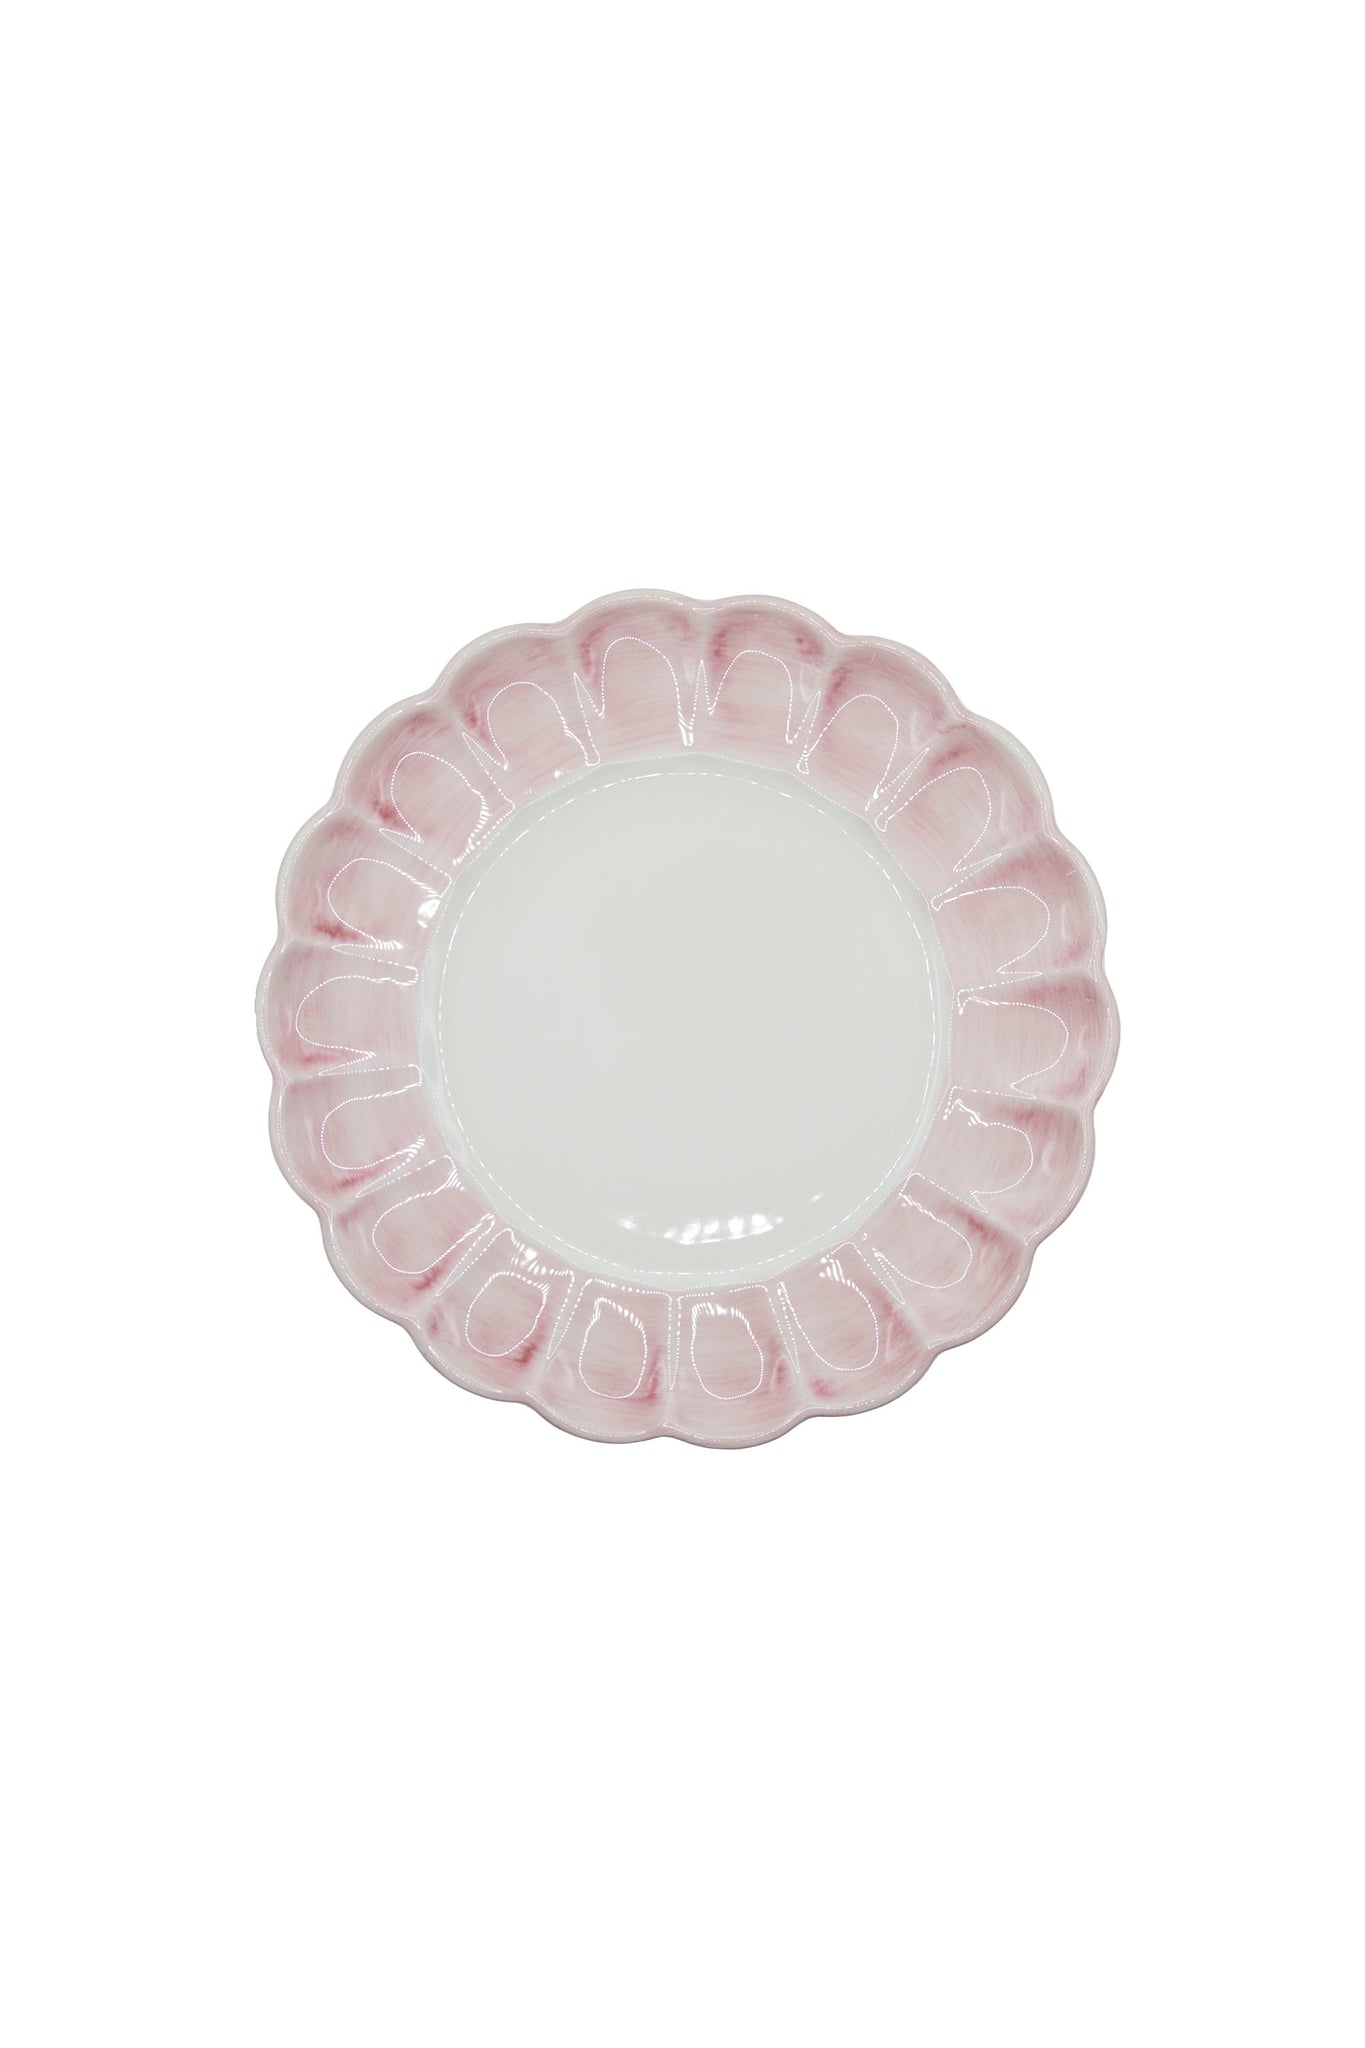 Lido Dinner Plate, Pink, Set of 4 - Skye McAlpine Tavola